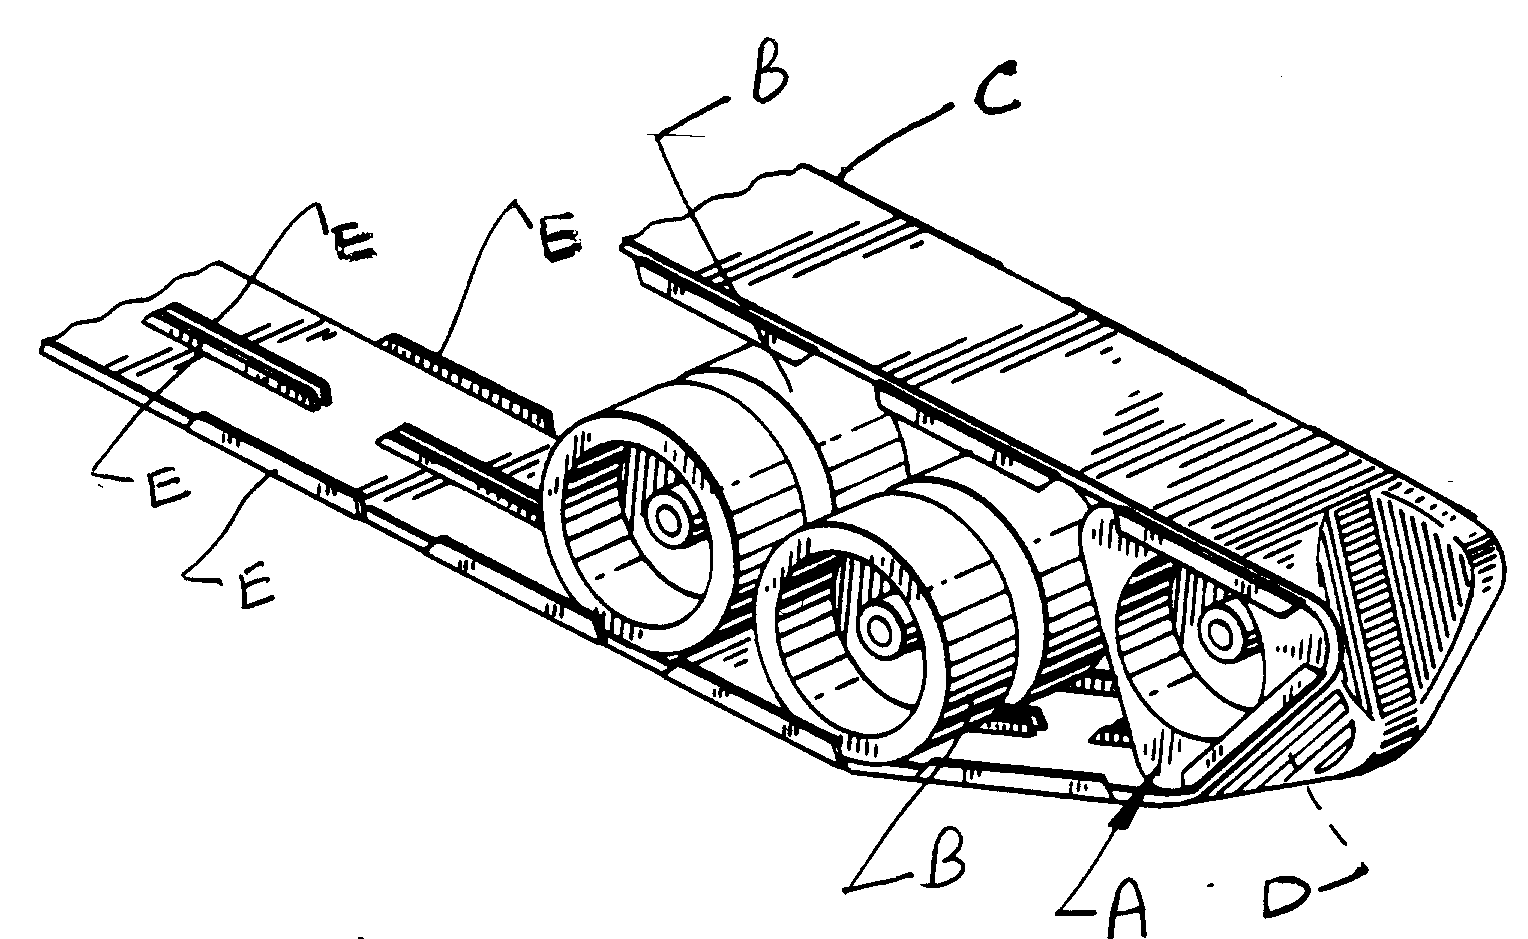 A - Drive wheel; B - Ground supporting wheels; C - Flexiblebelt; D - Belt shoes; E - Shoe lips
